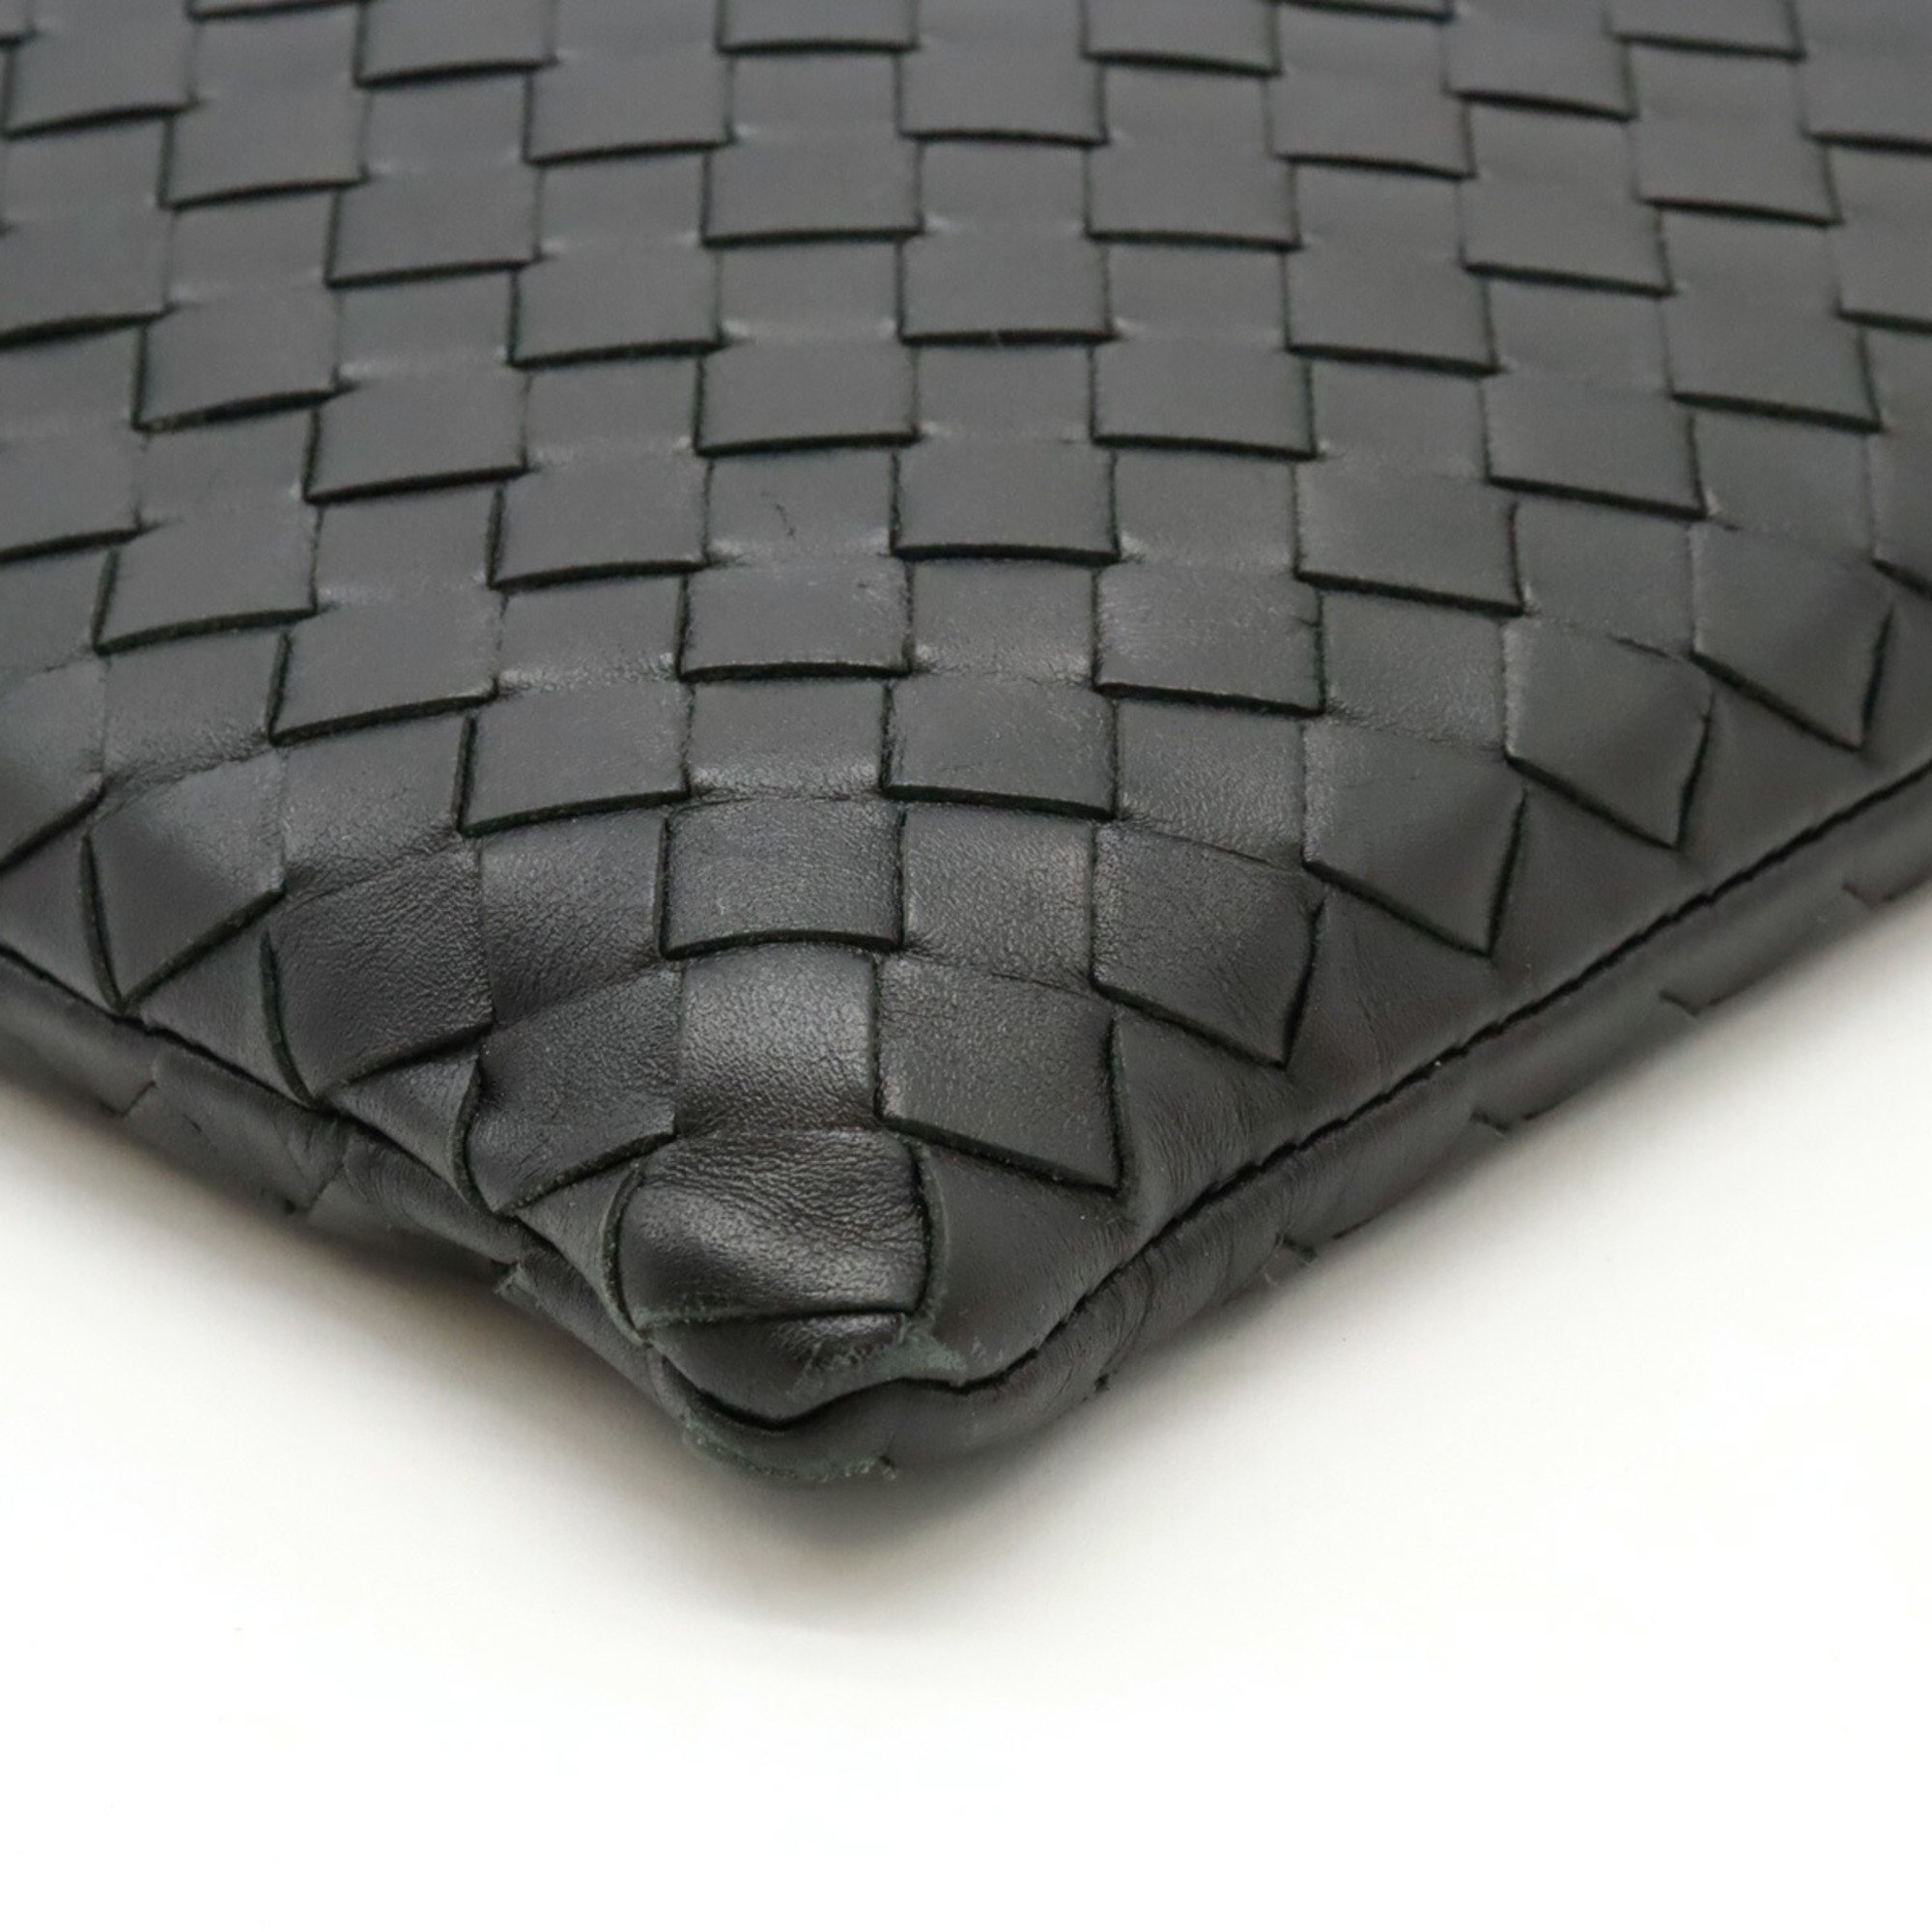 BOTTEGA VENETA Bottega Veneta Intrecciato Clutch Bag Second Leather Black 224052